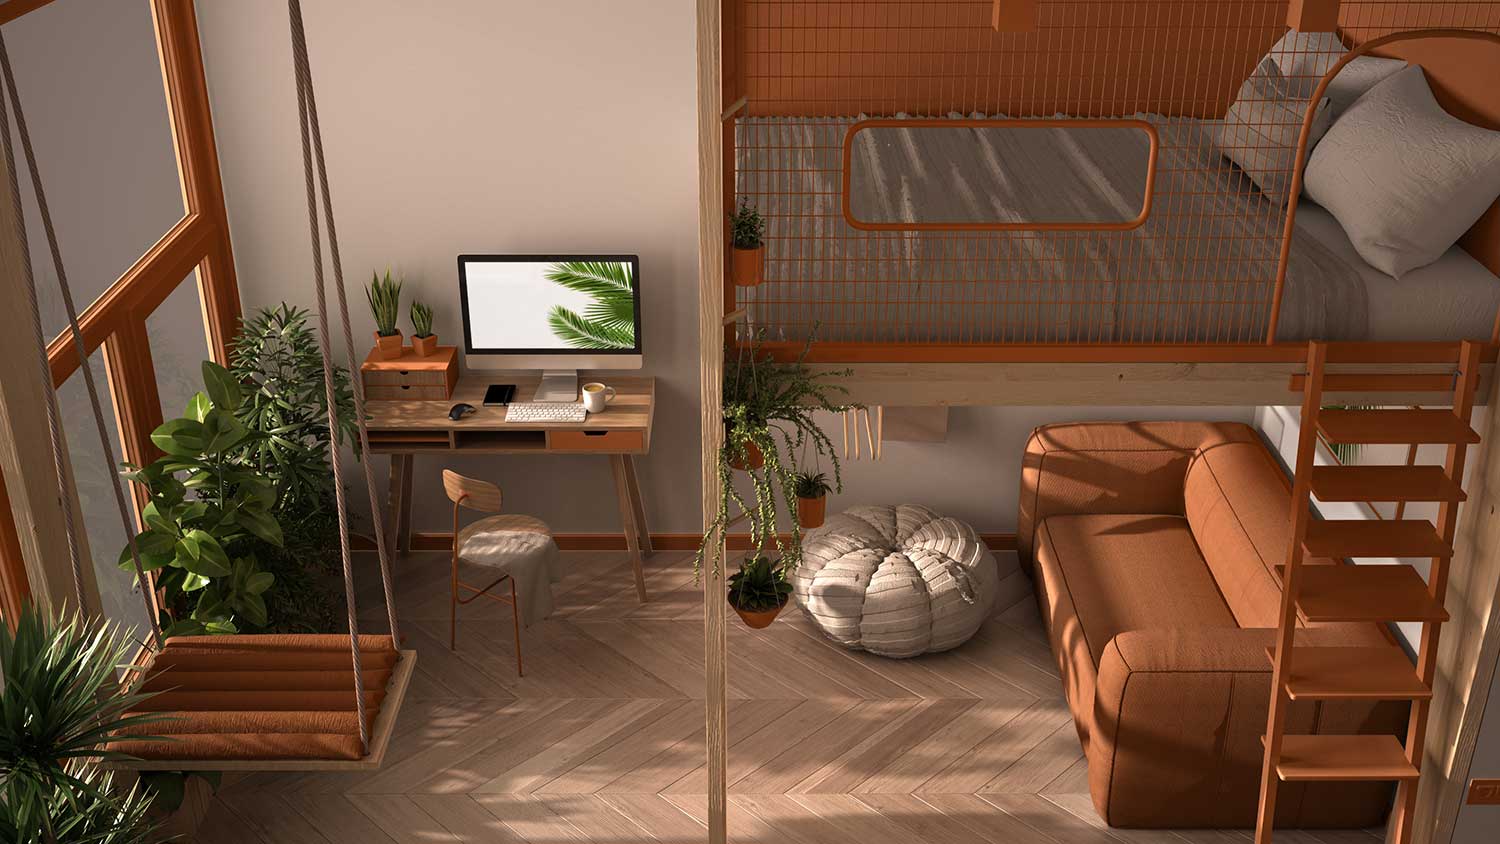 Minimalist studio apartment with loft bunk double bed, swing